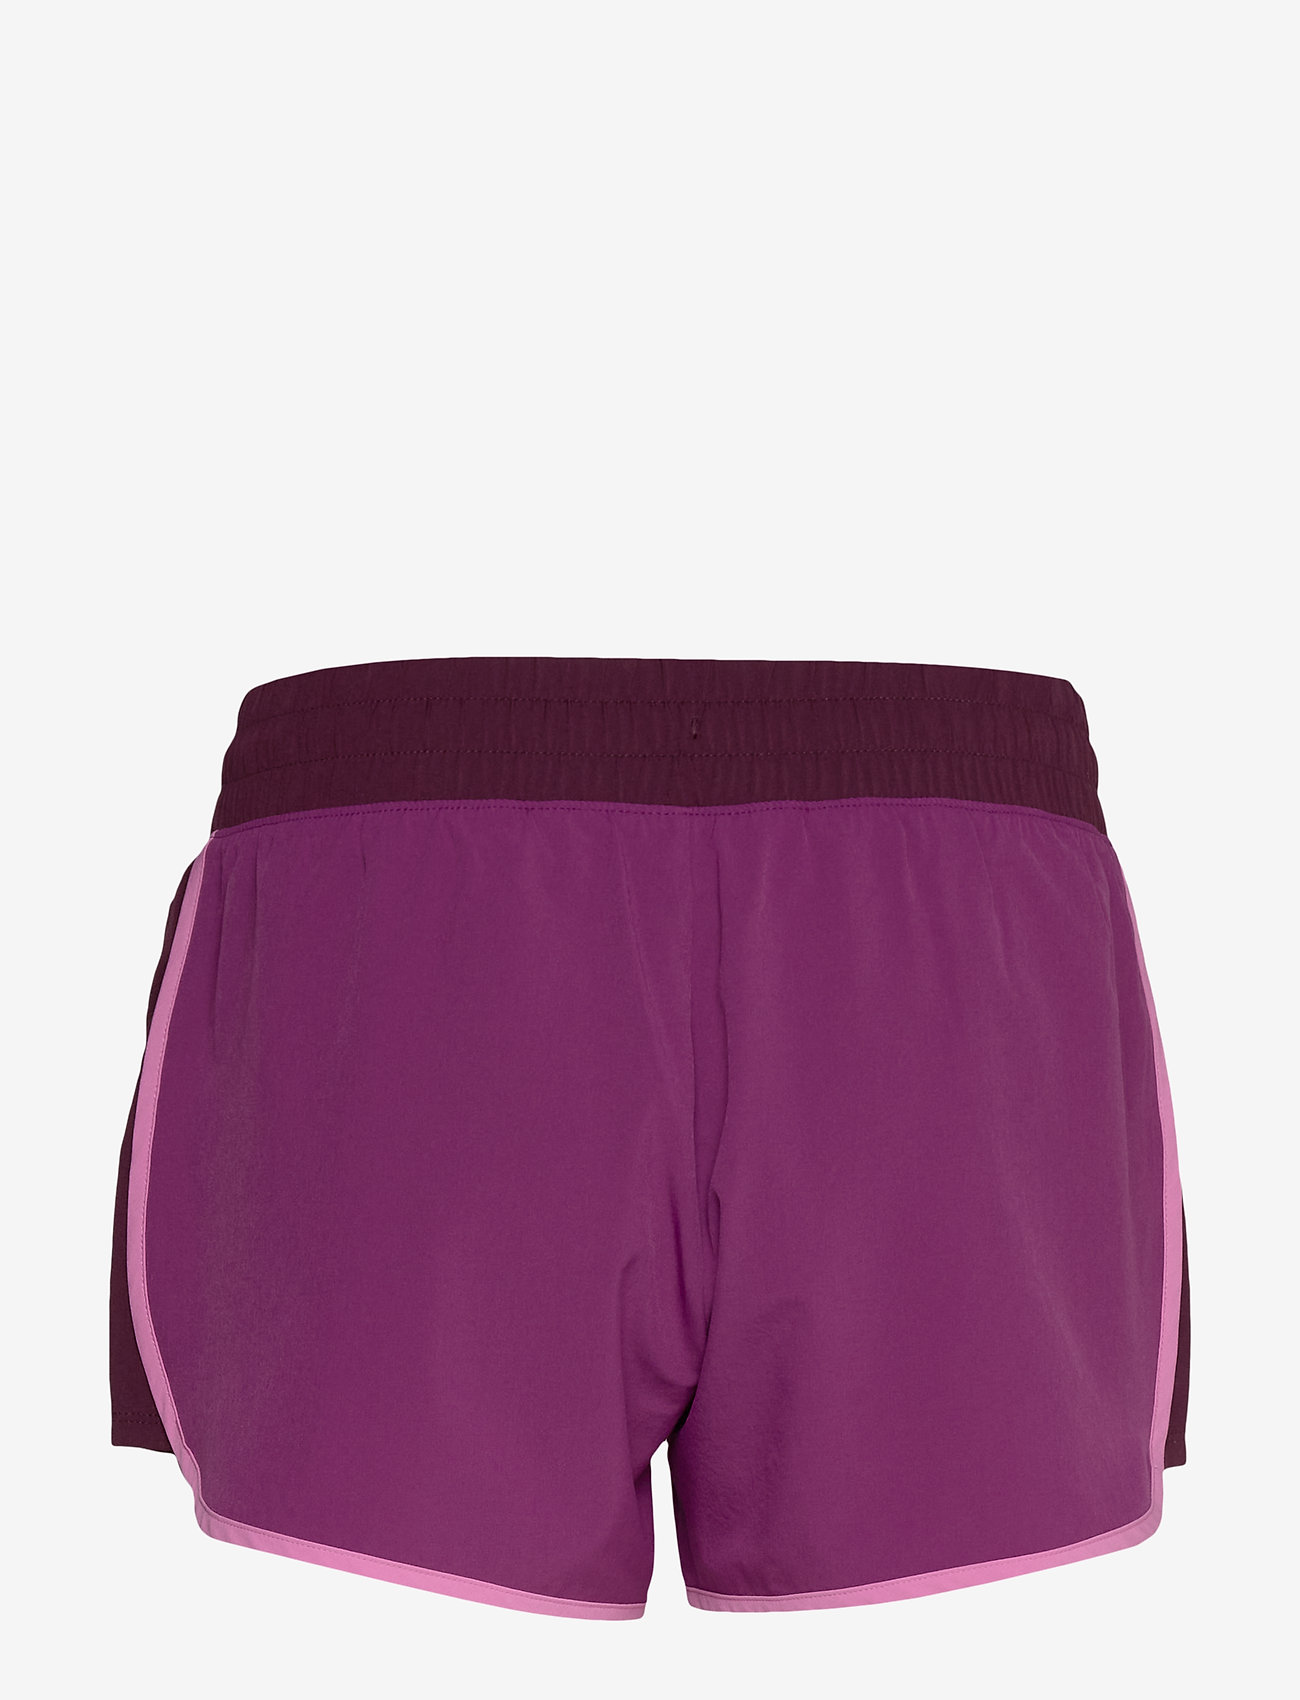 gap workout shorts